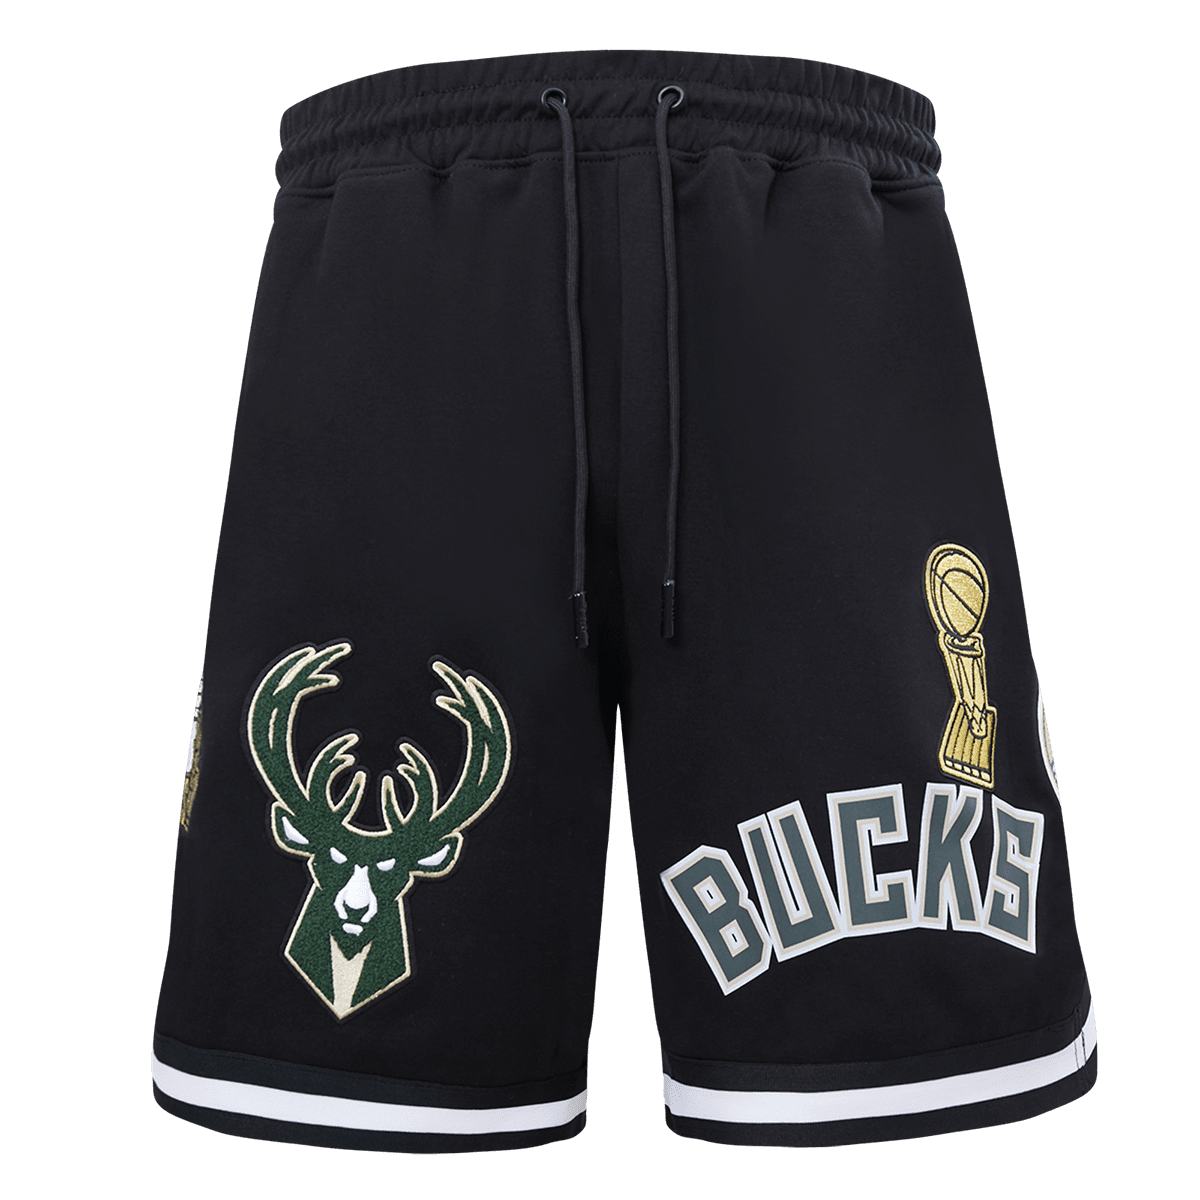 Milwaukee Bucks 2021 NBA Champions official merchandise, buy now